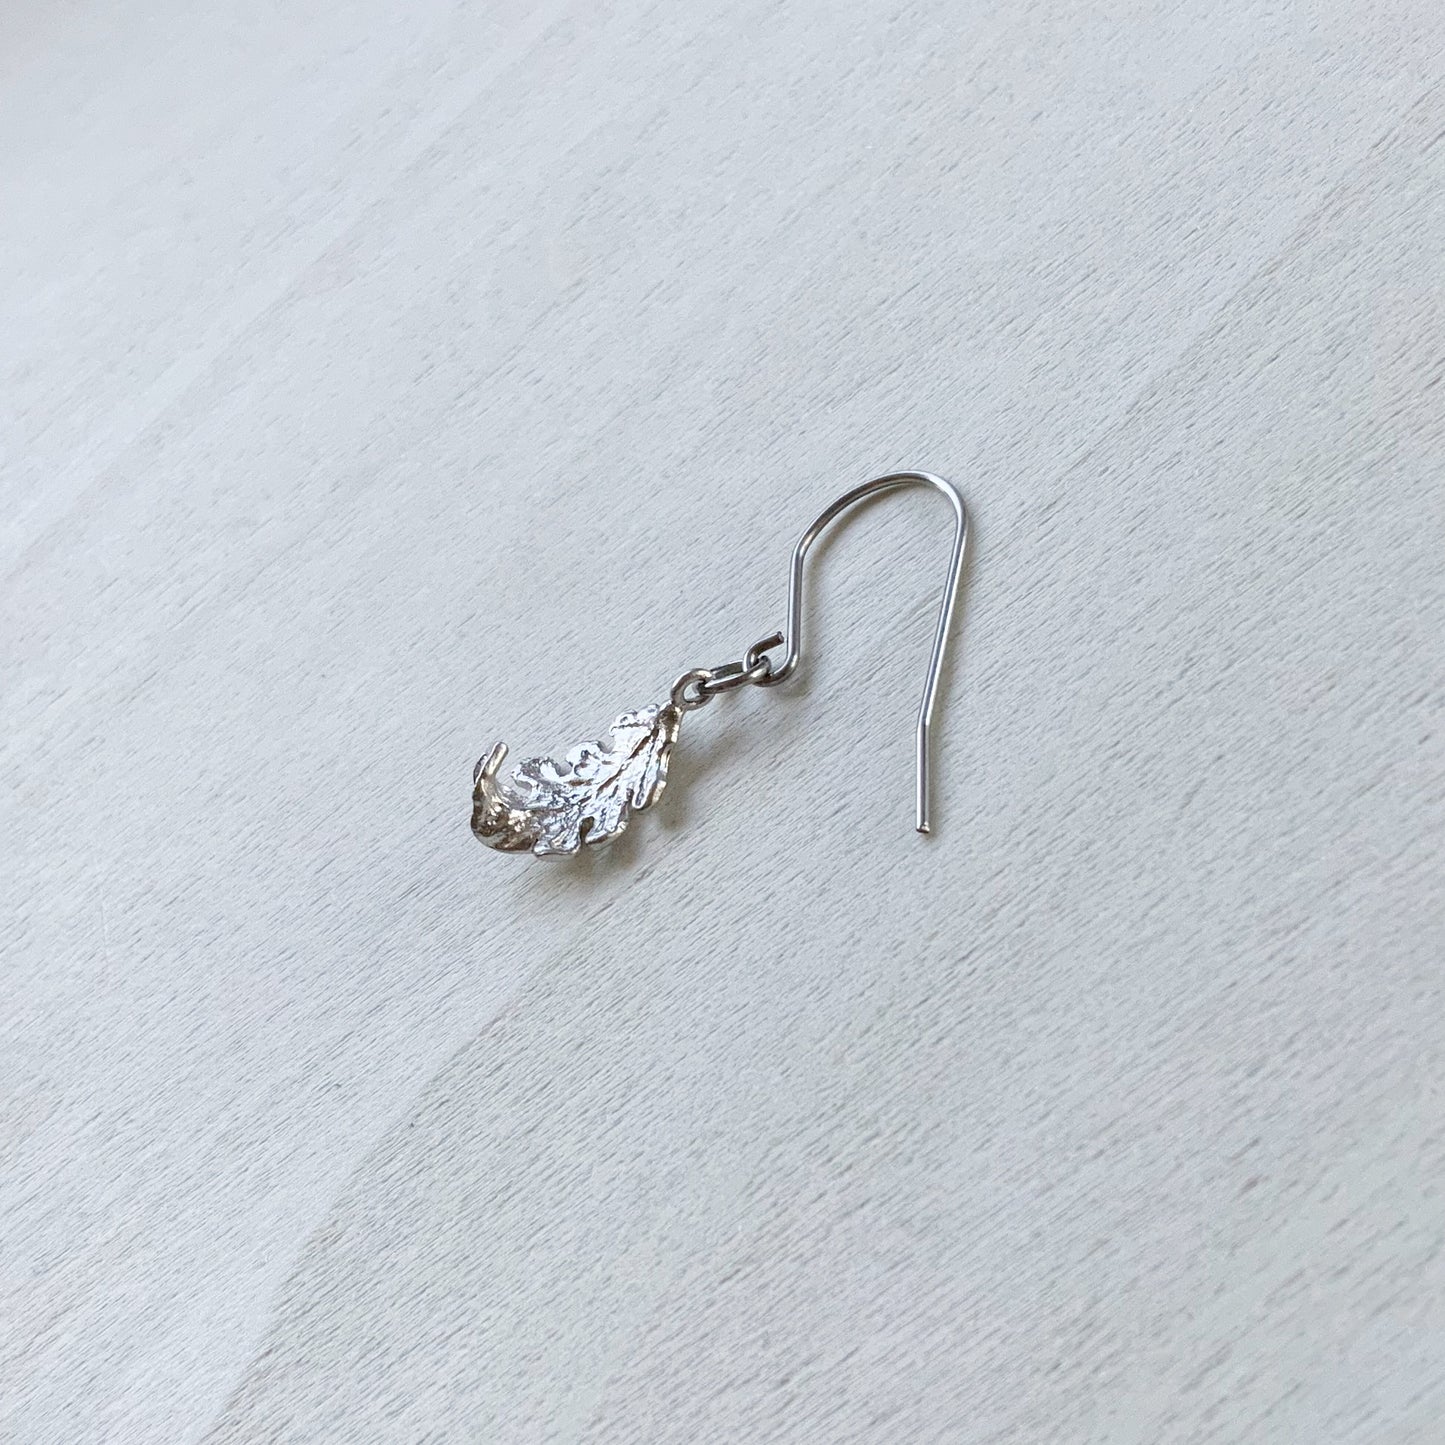 Curled Up Leaf Earring Set - Platinum Silver